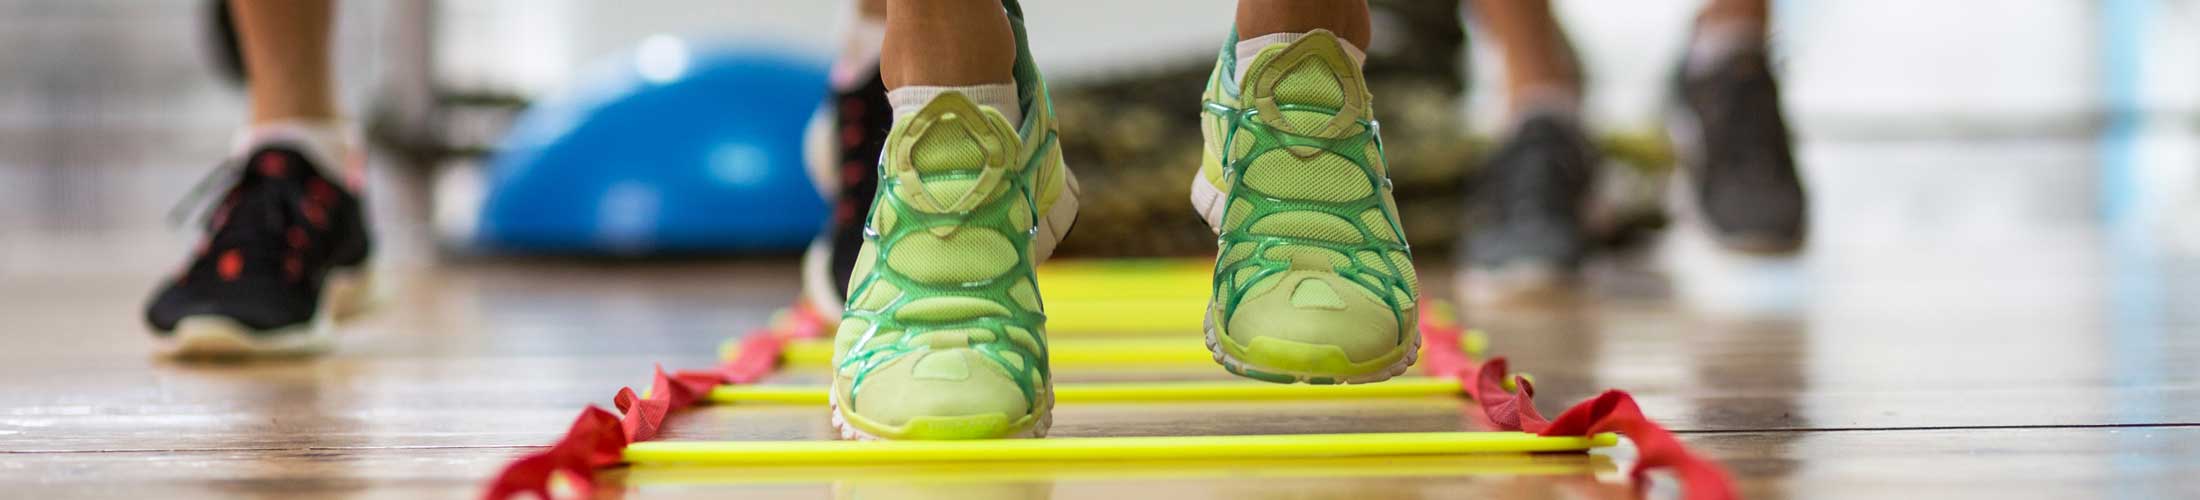 Tennis shoes running through a fitness ladder